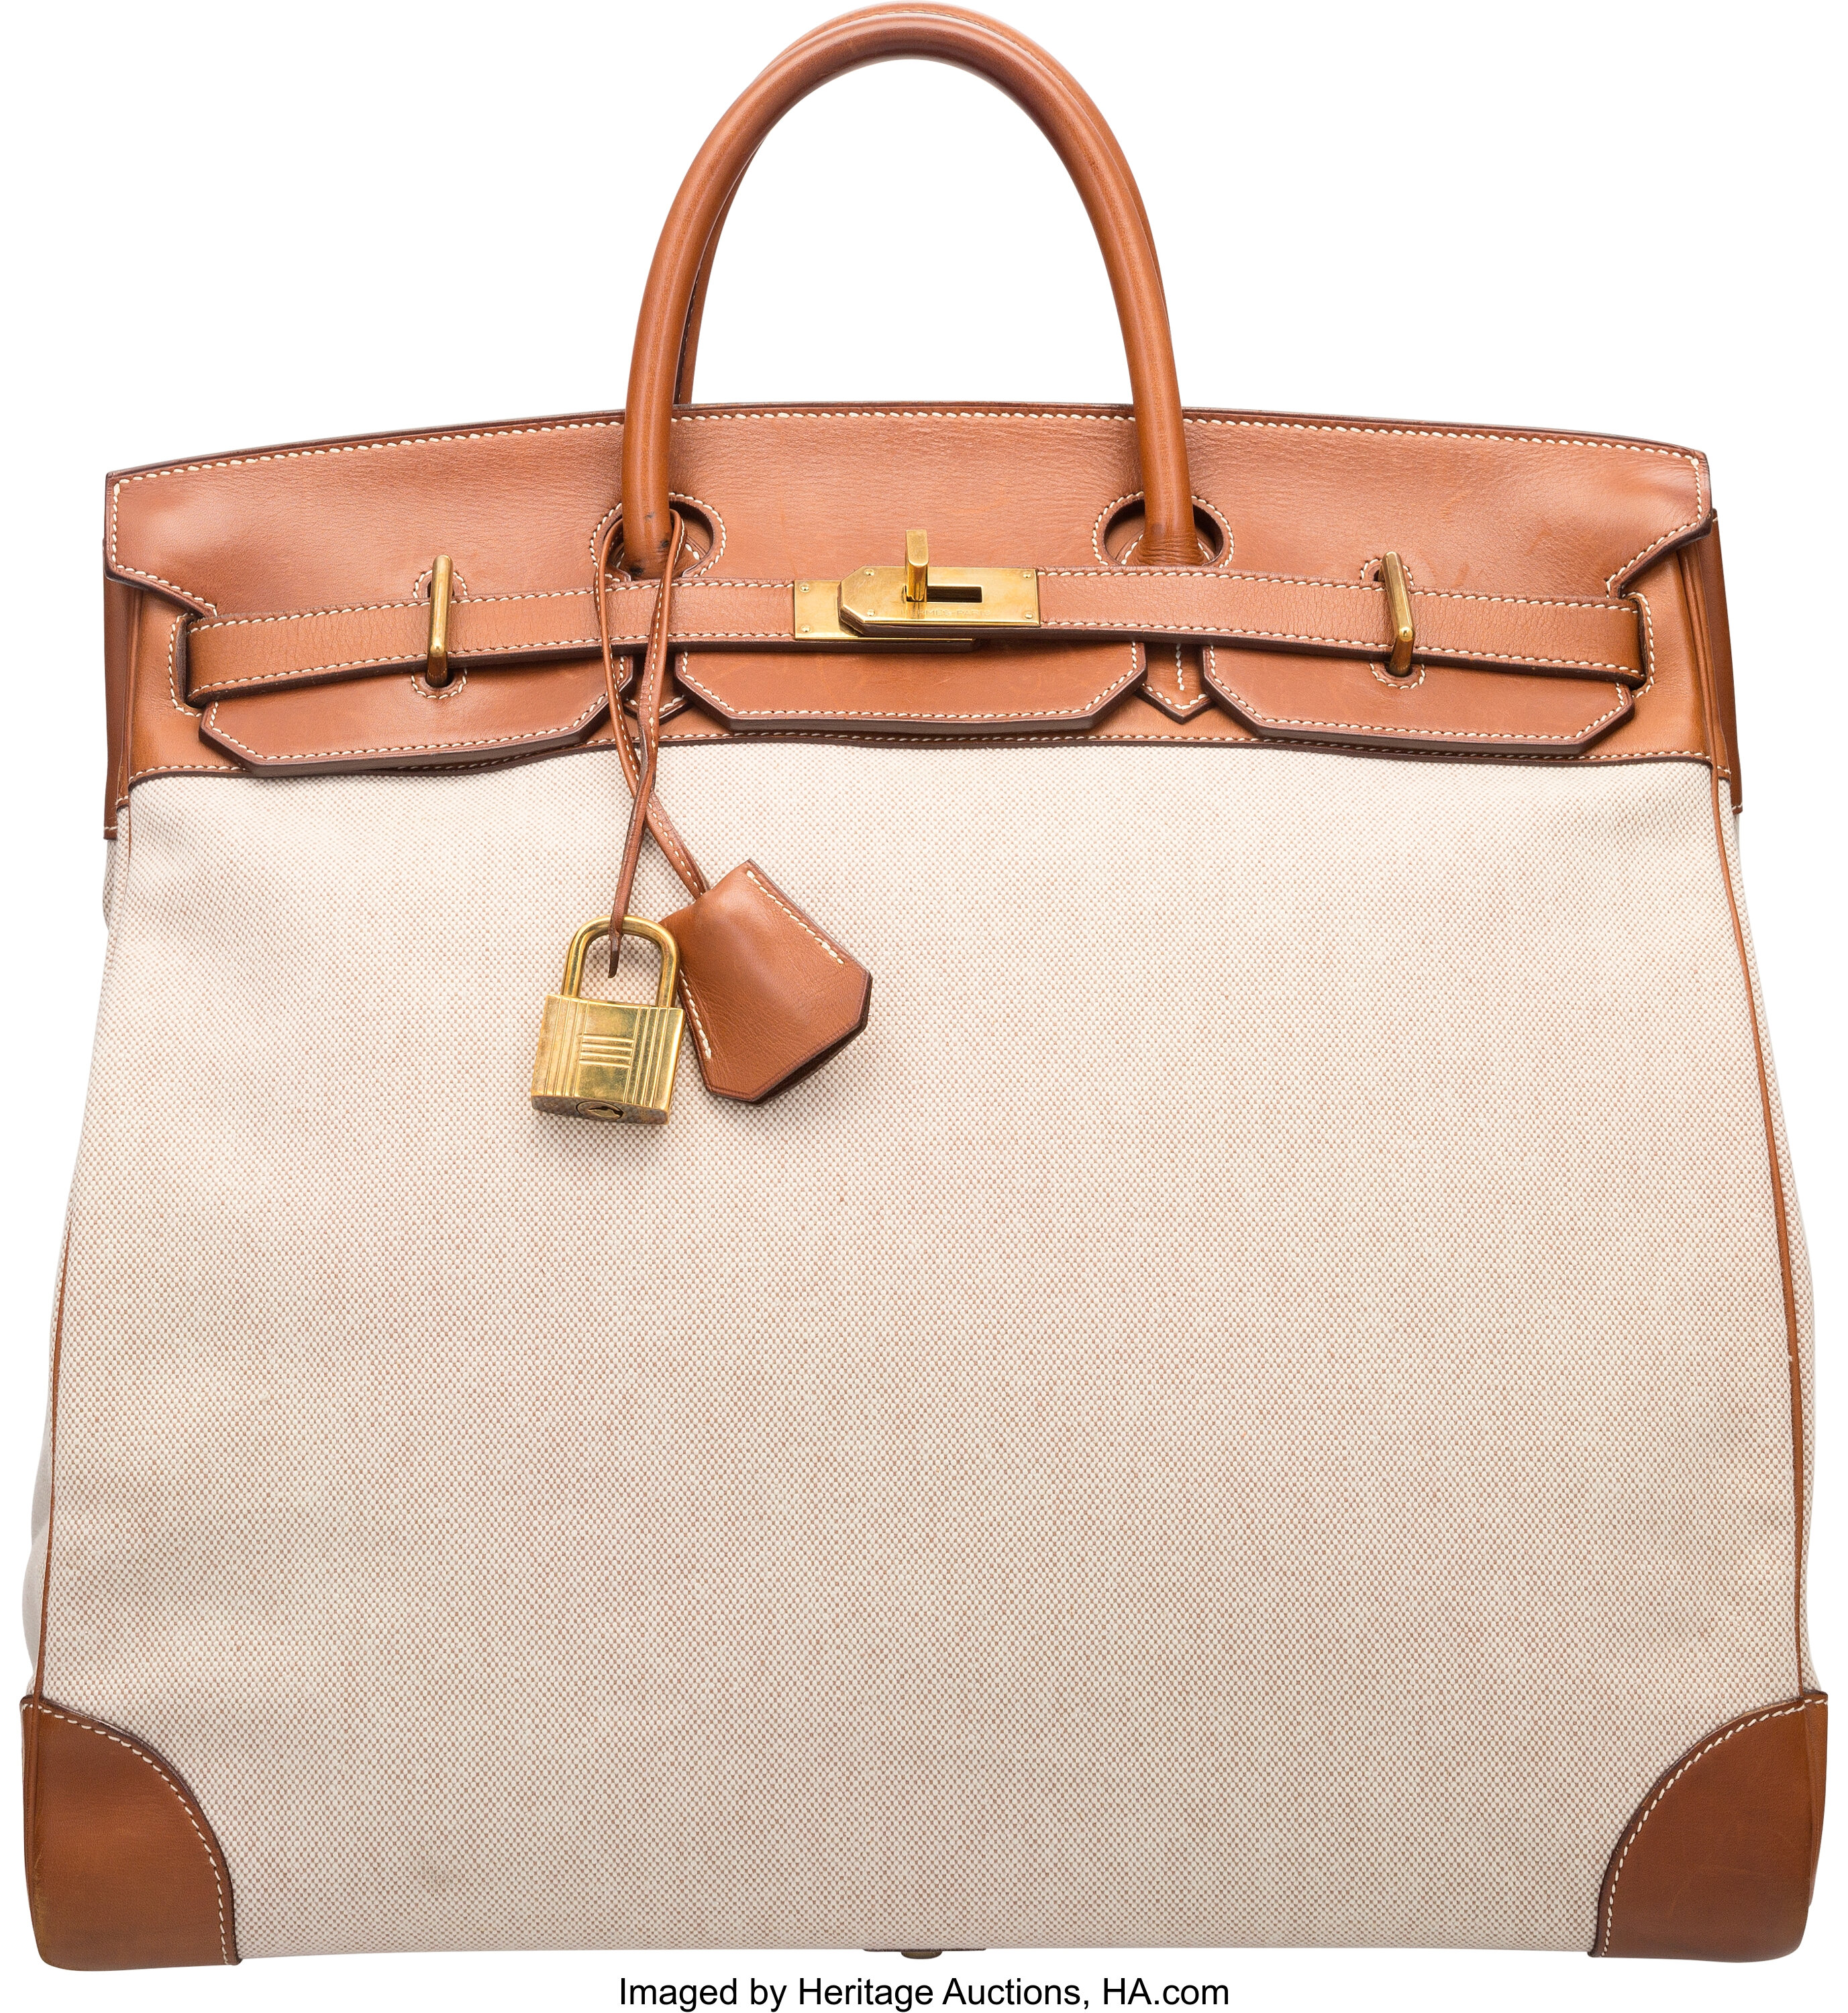 Hermes 45cm Fauve Barenia Leather & Toile HAC Birkin Bag with Gold